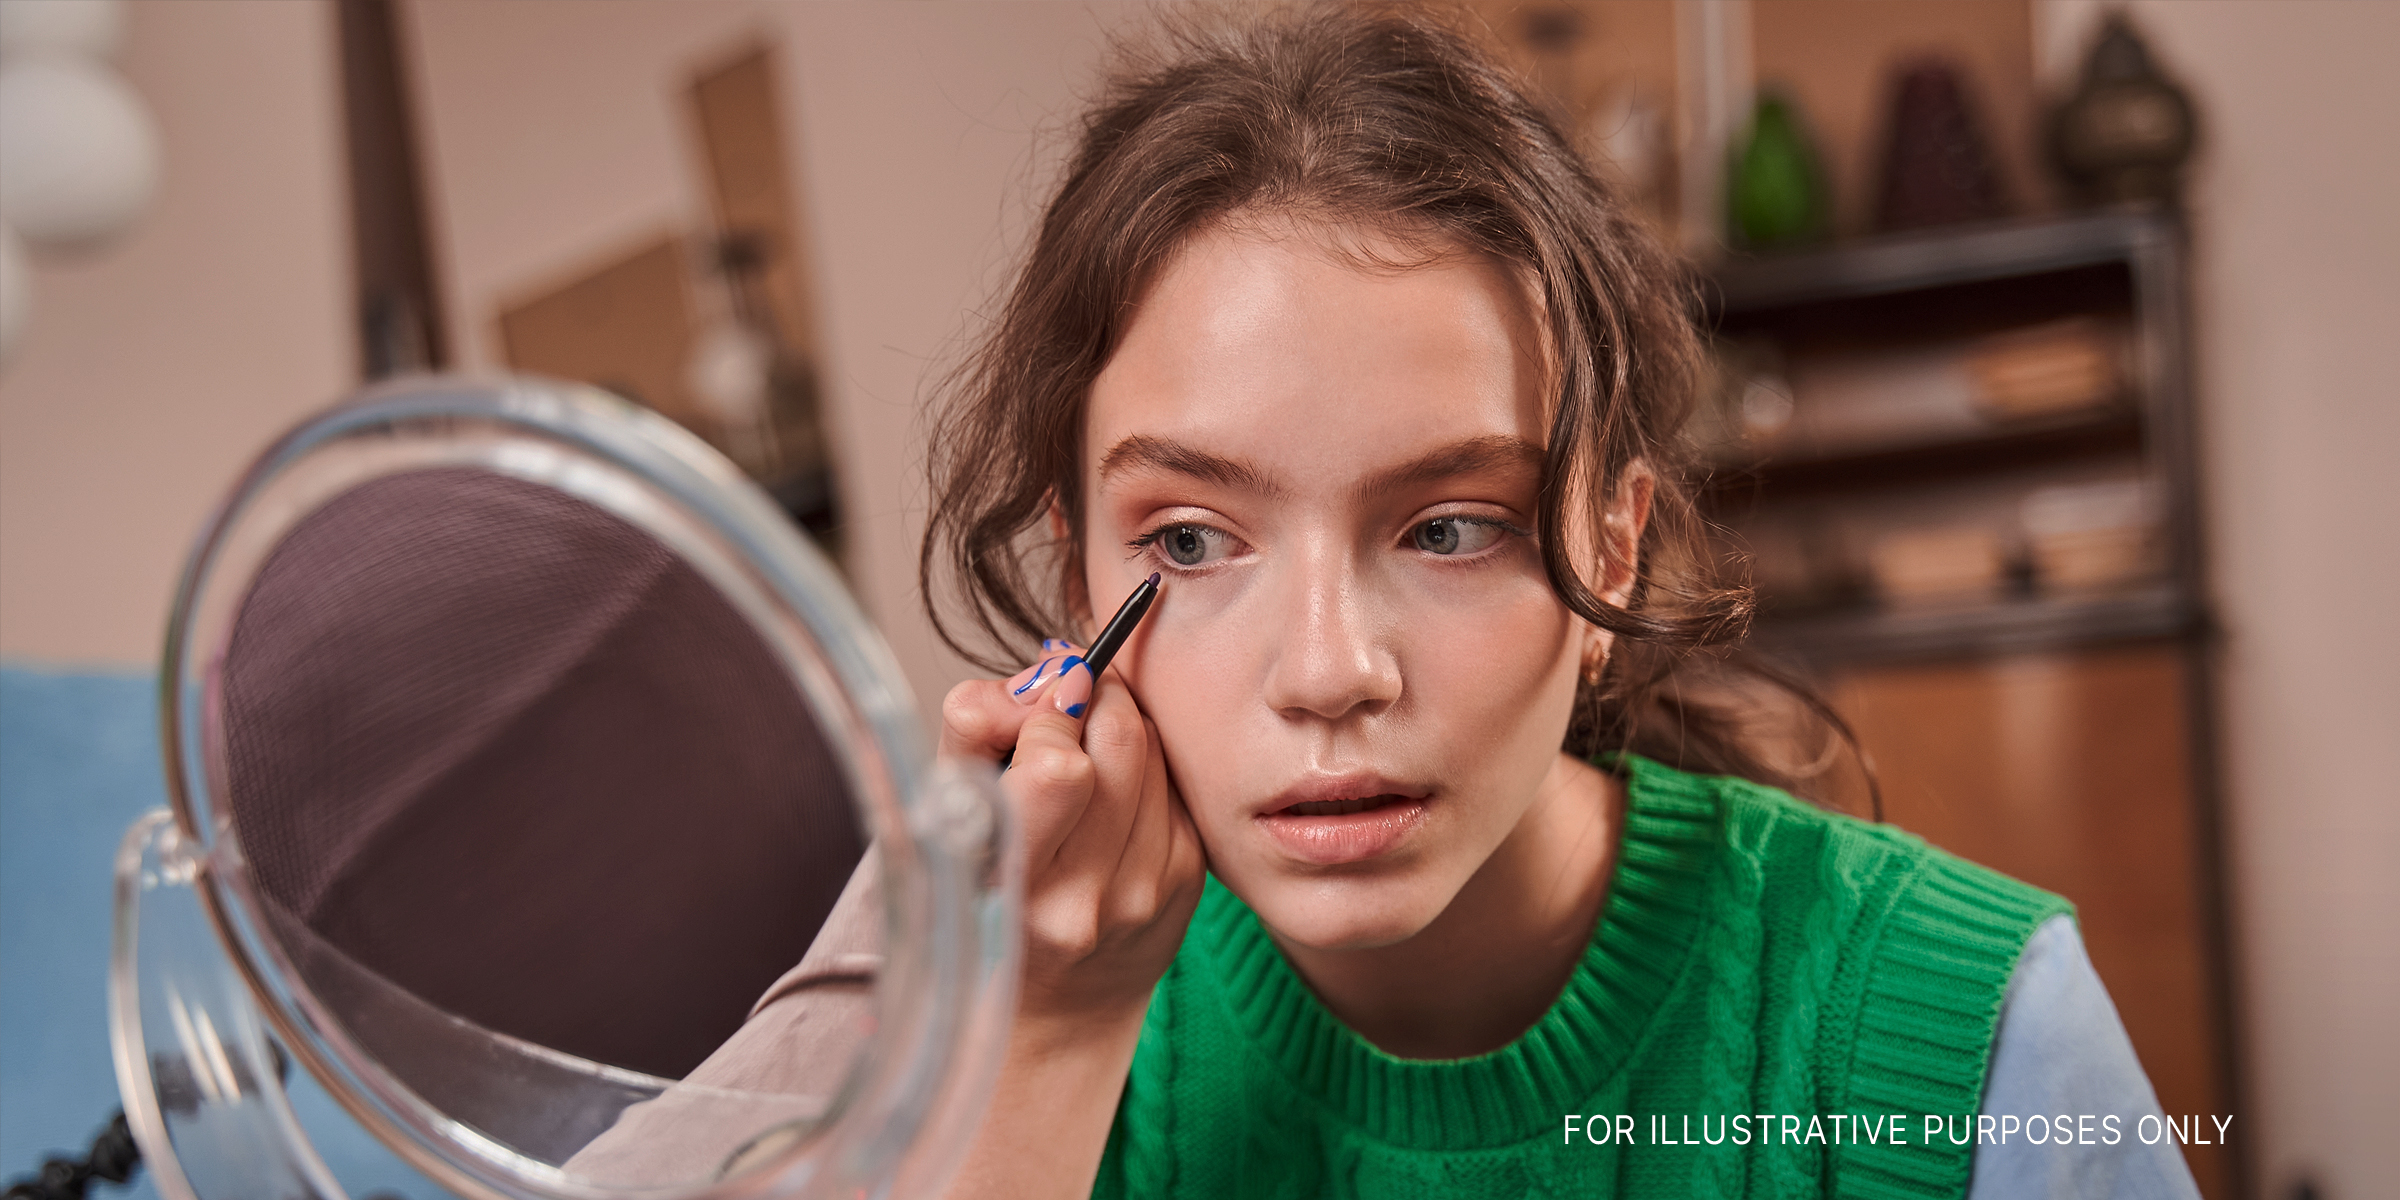 A teenage girl applying makeup | Source: Shutterstock